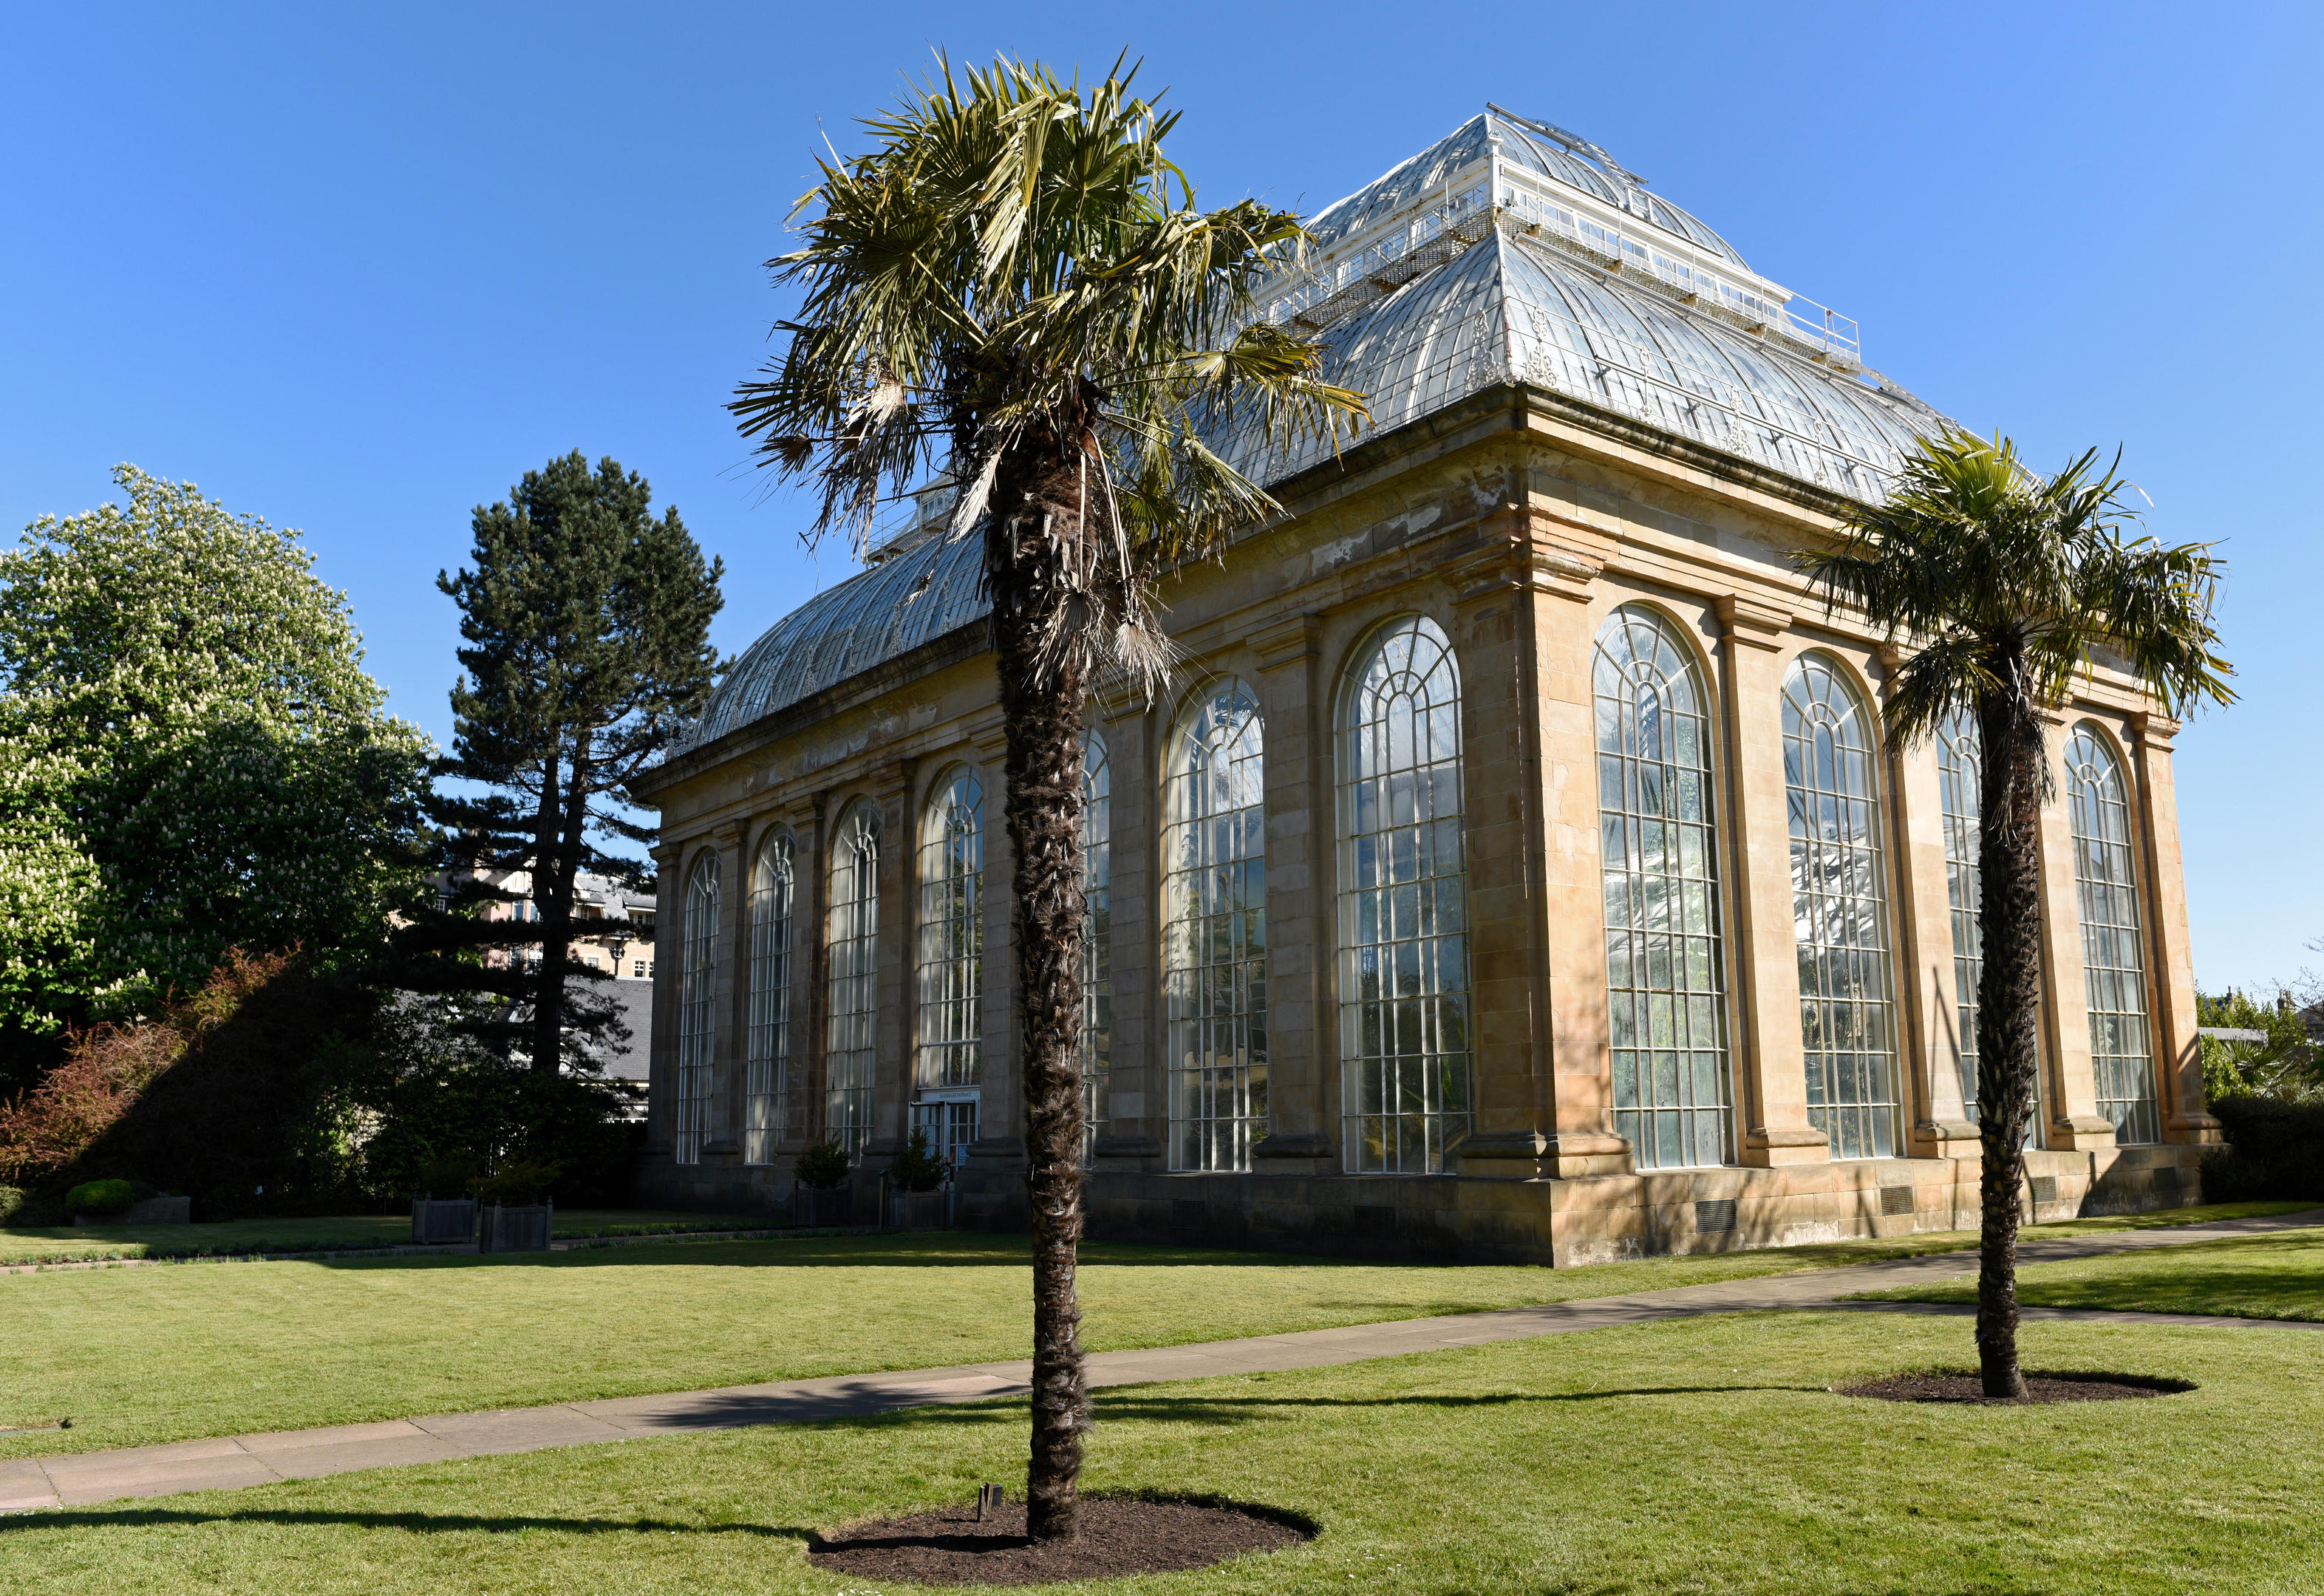 The Palm House at the Royal Botanic Gardens in Edinburgh (100 Media)